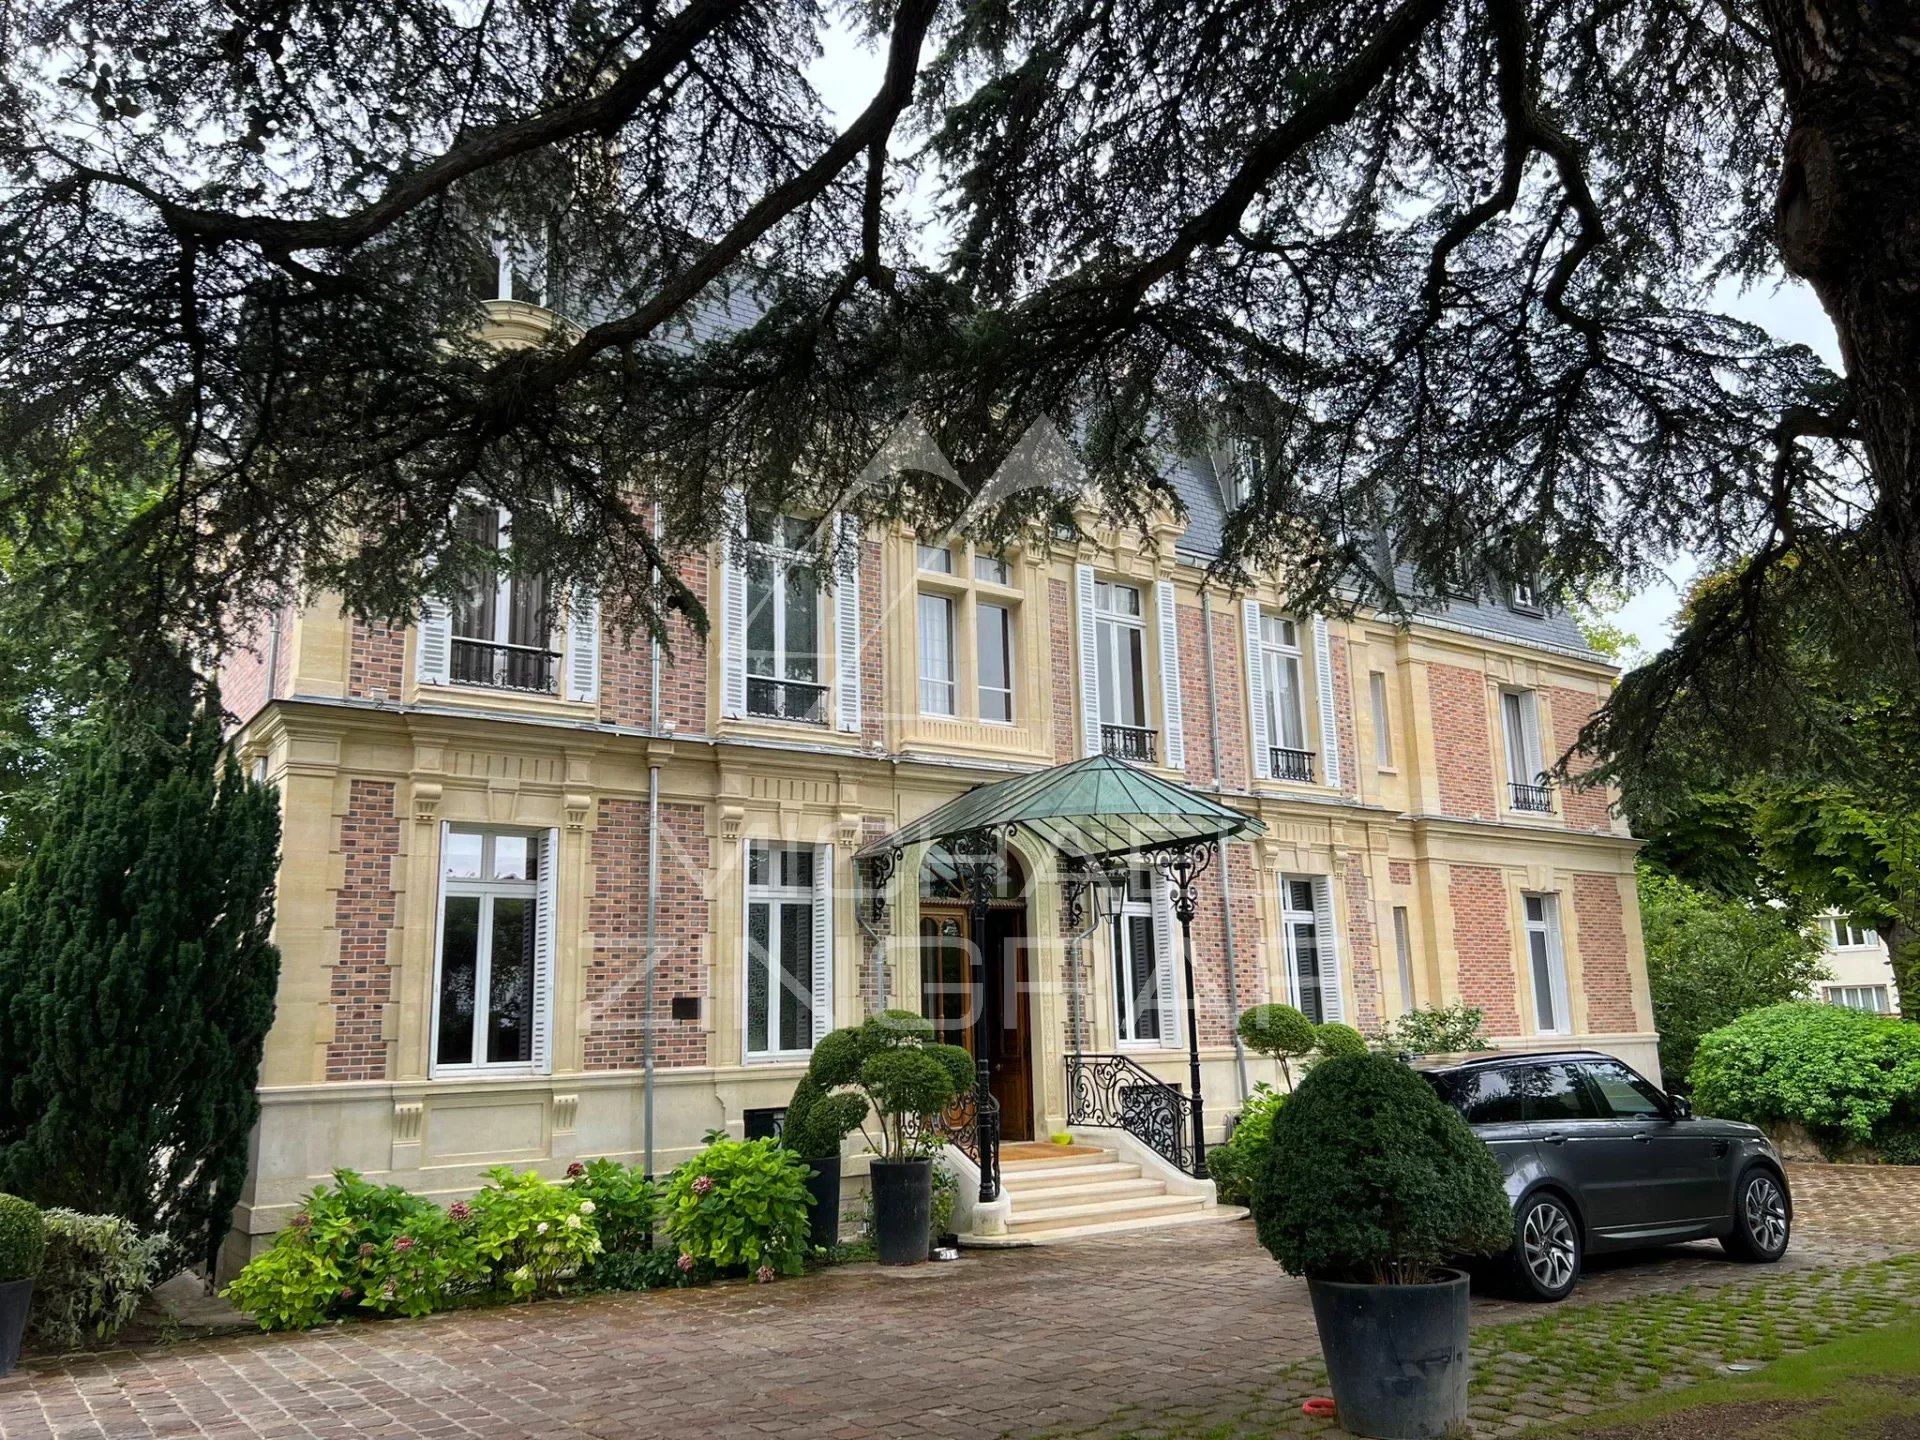 Magnifique Hotel Particulier style Napoléon III